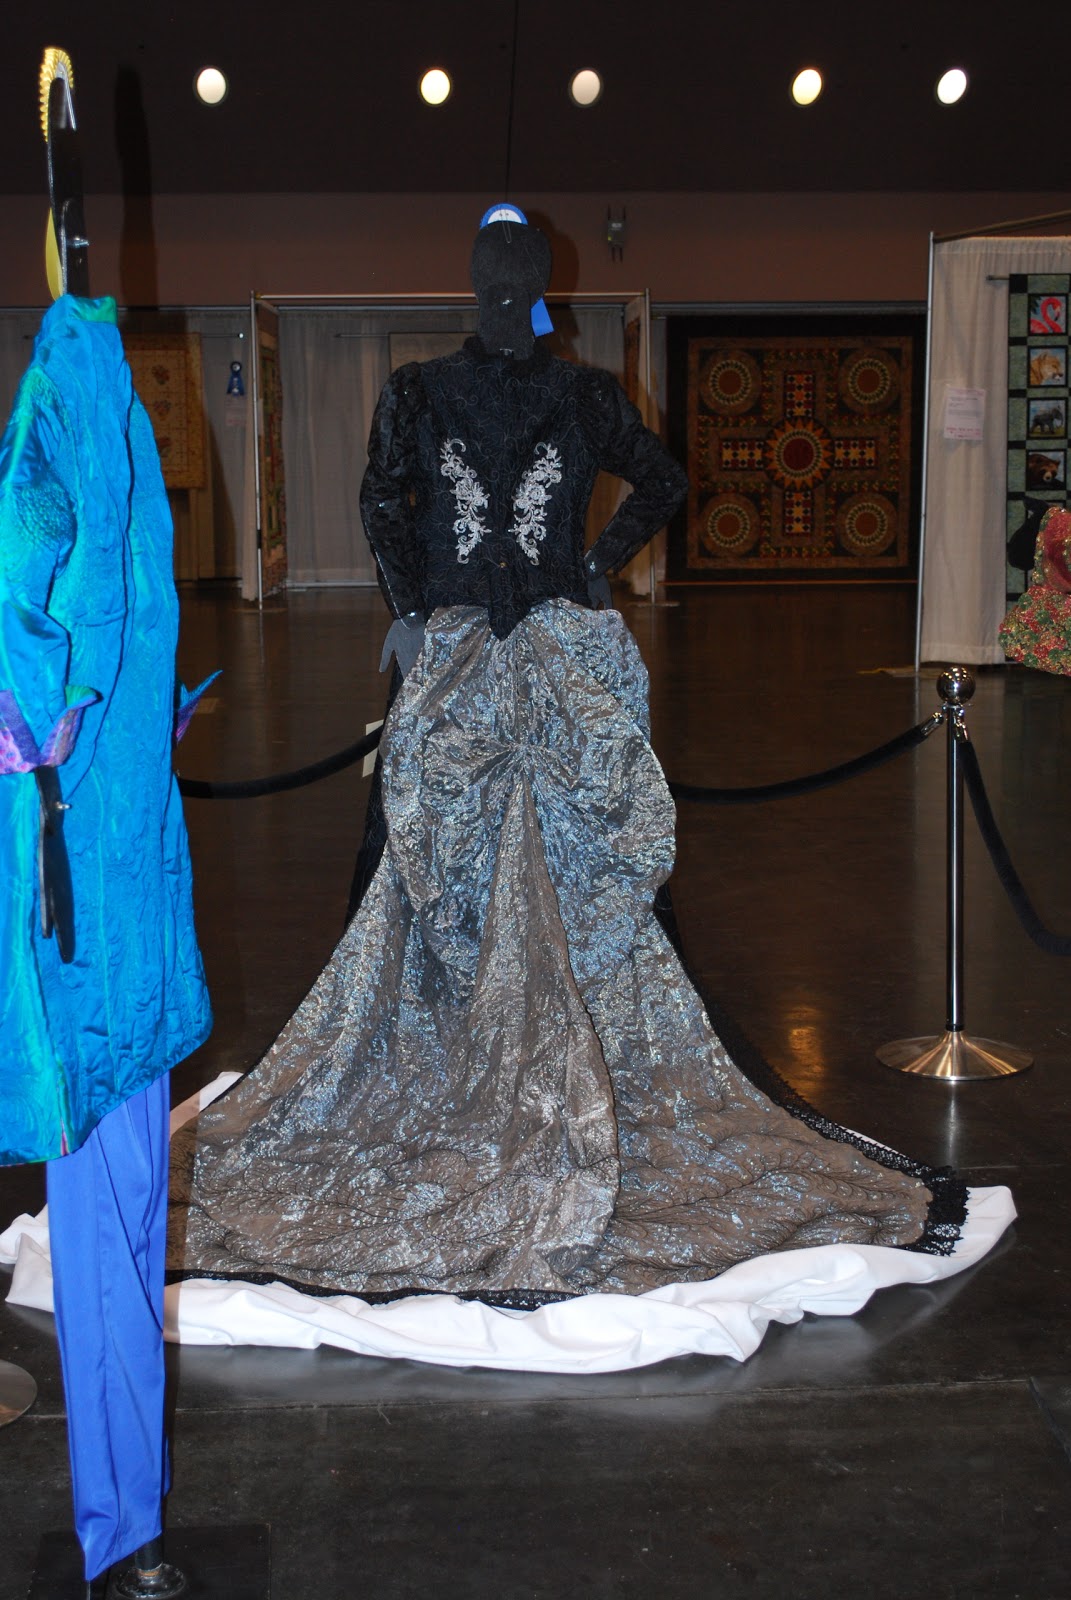 Ferret Fabricates: Victorian Steampunk - that dress